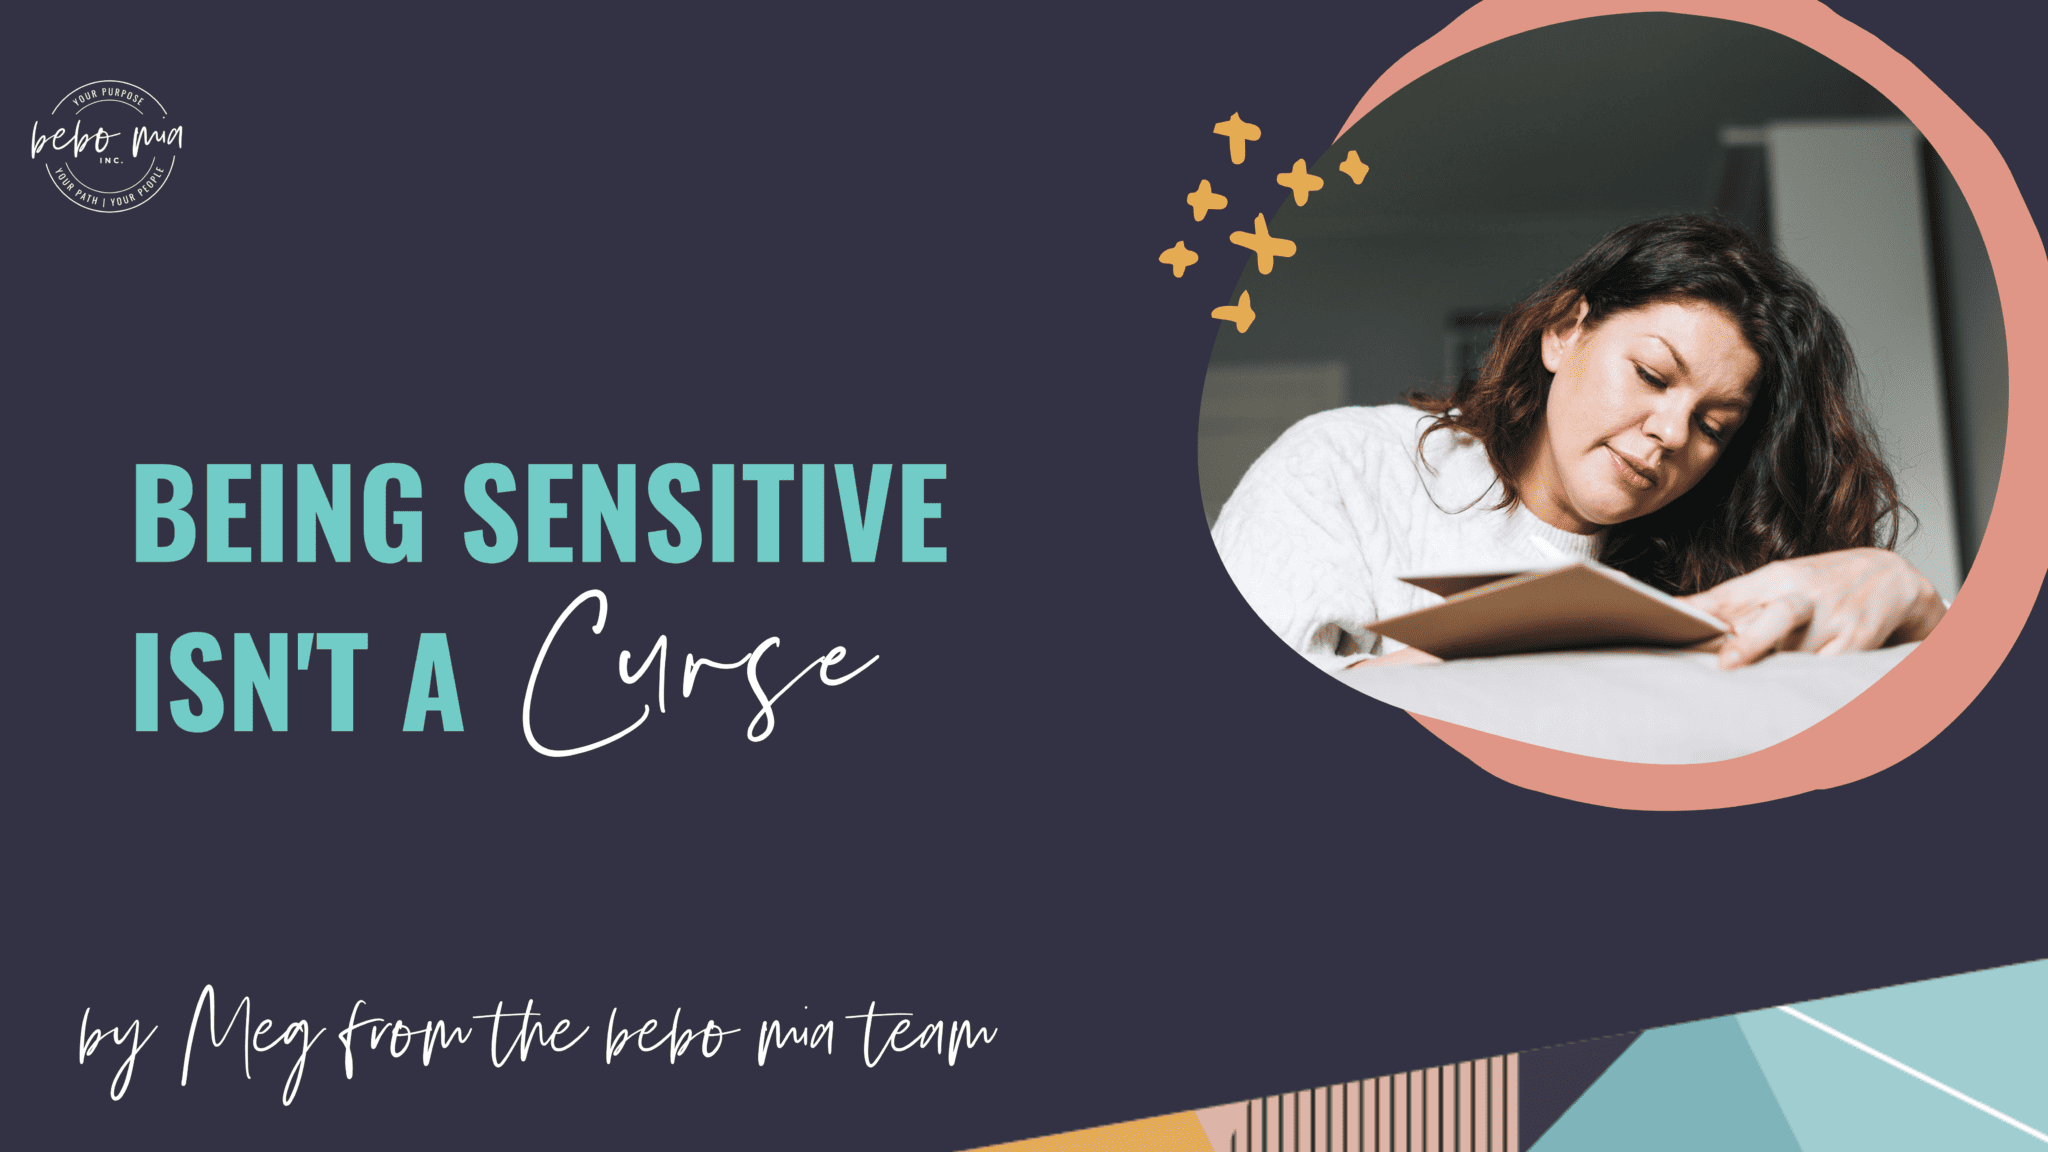 Being sensitive